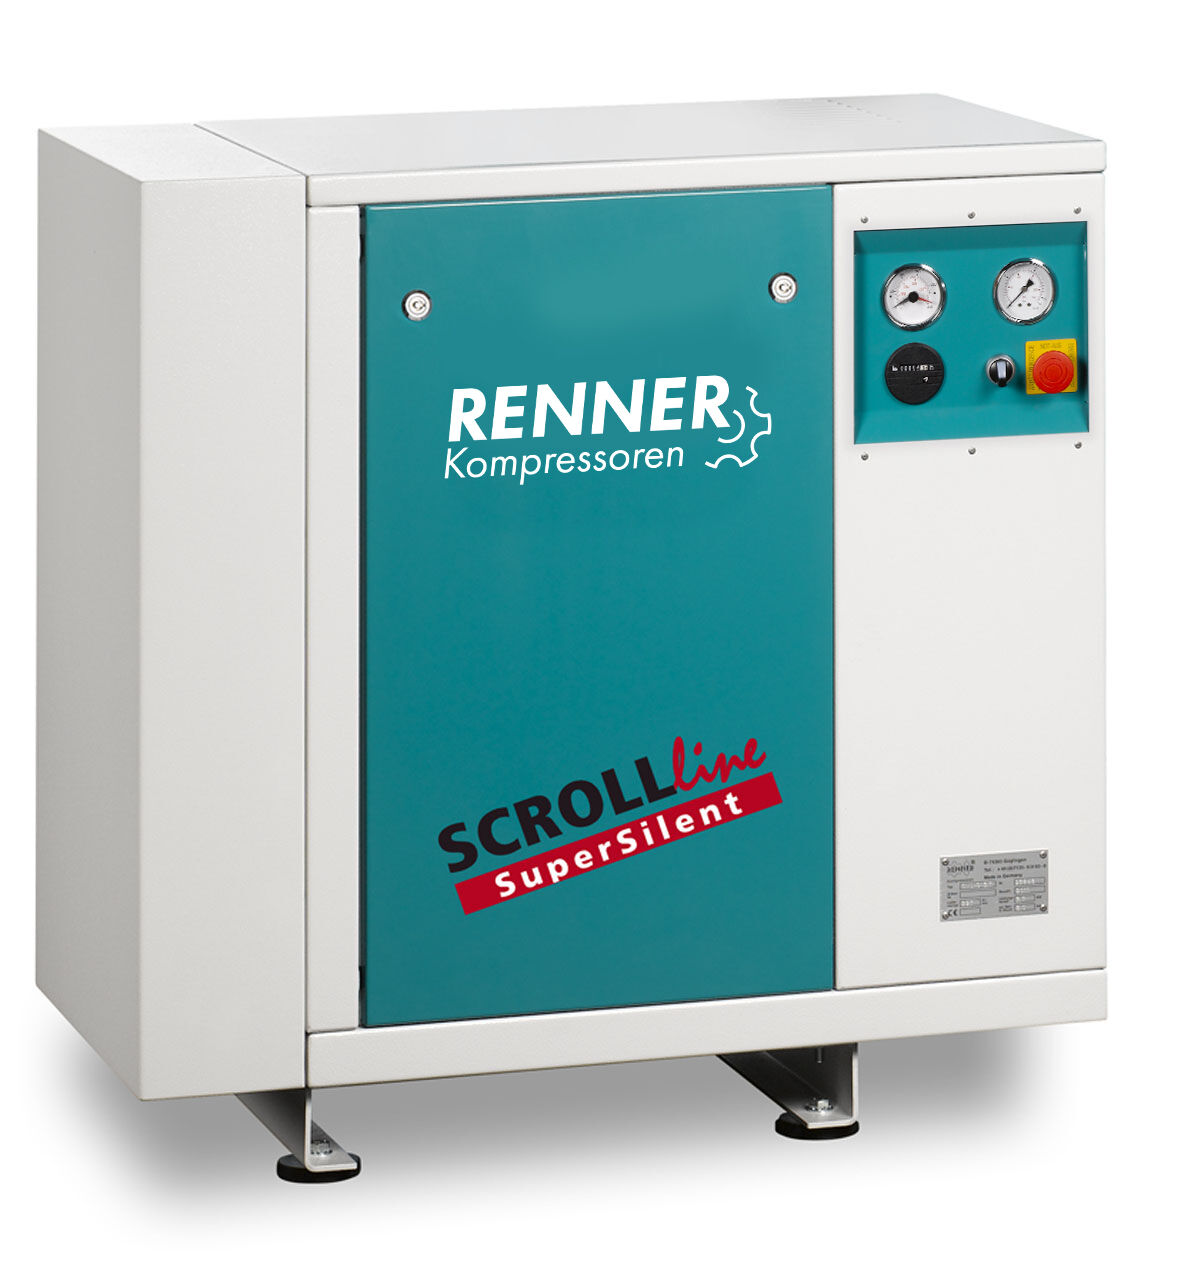 RENNER-Kompressor SL-S 2,2 - SuperSilent ölfreier Scrollkompressor